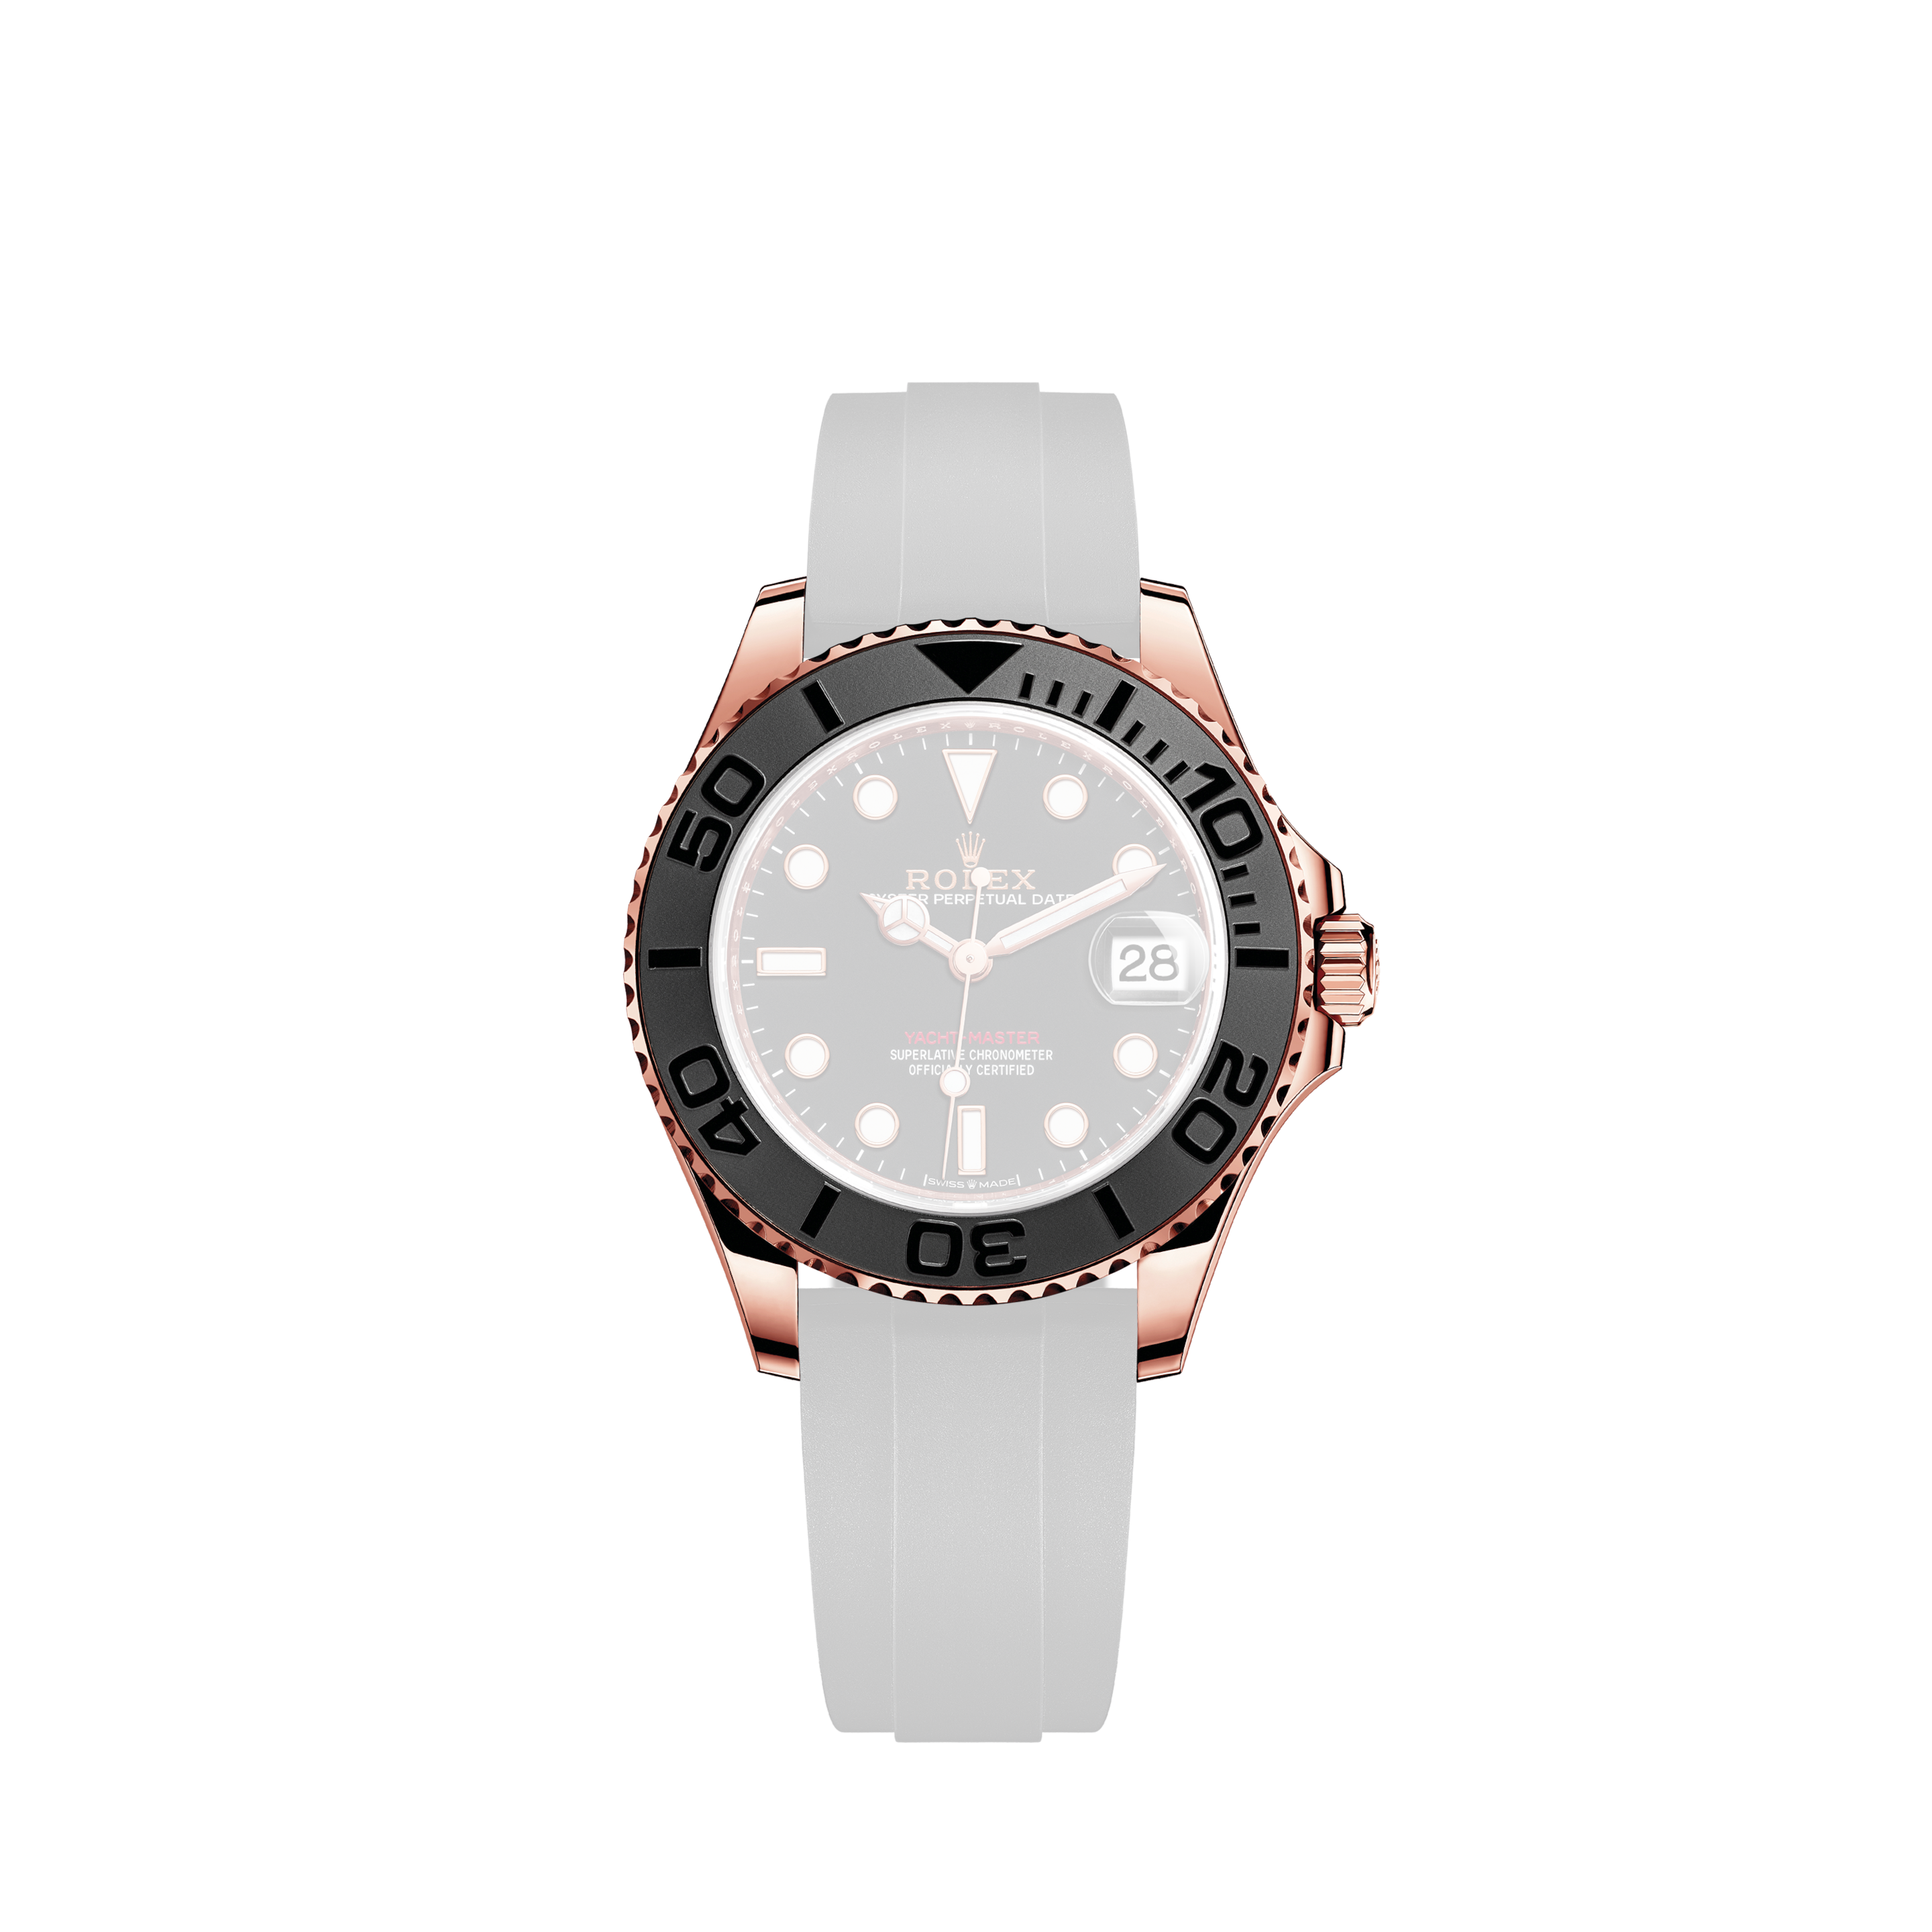 Rolex Datejust 31mm 2.95ct Diamond Bezel/Lugs/Aqua Blue Dial Steel Midsize Watch